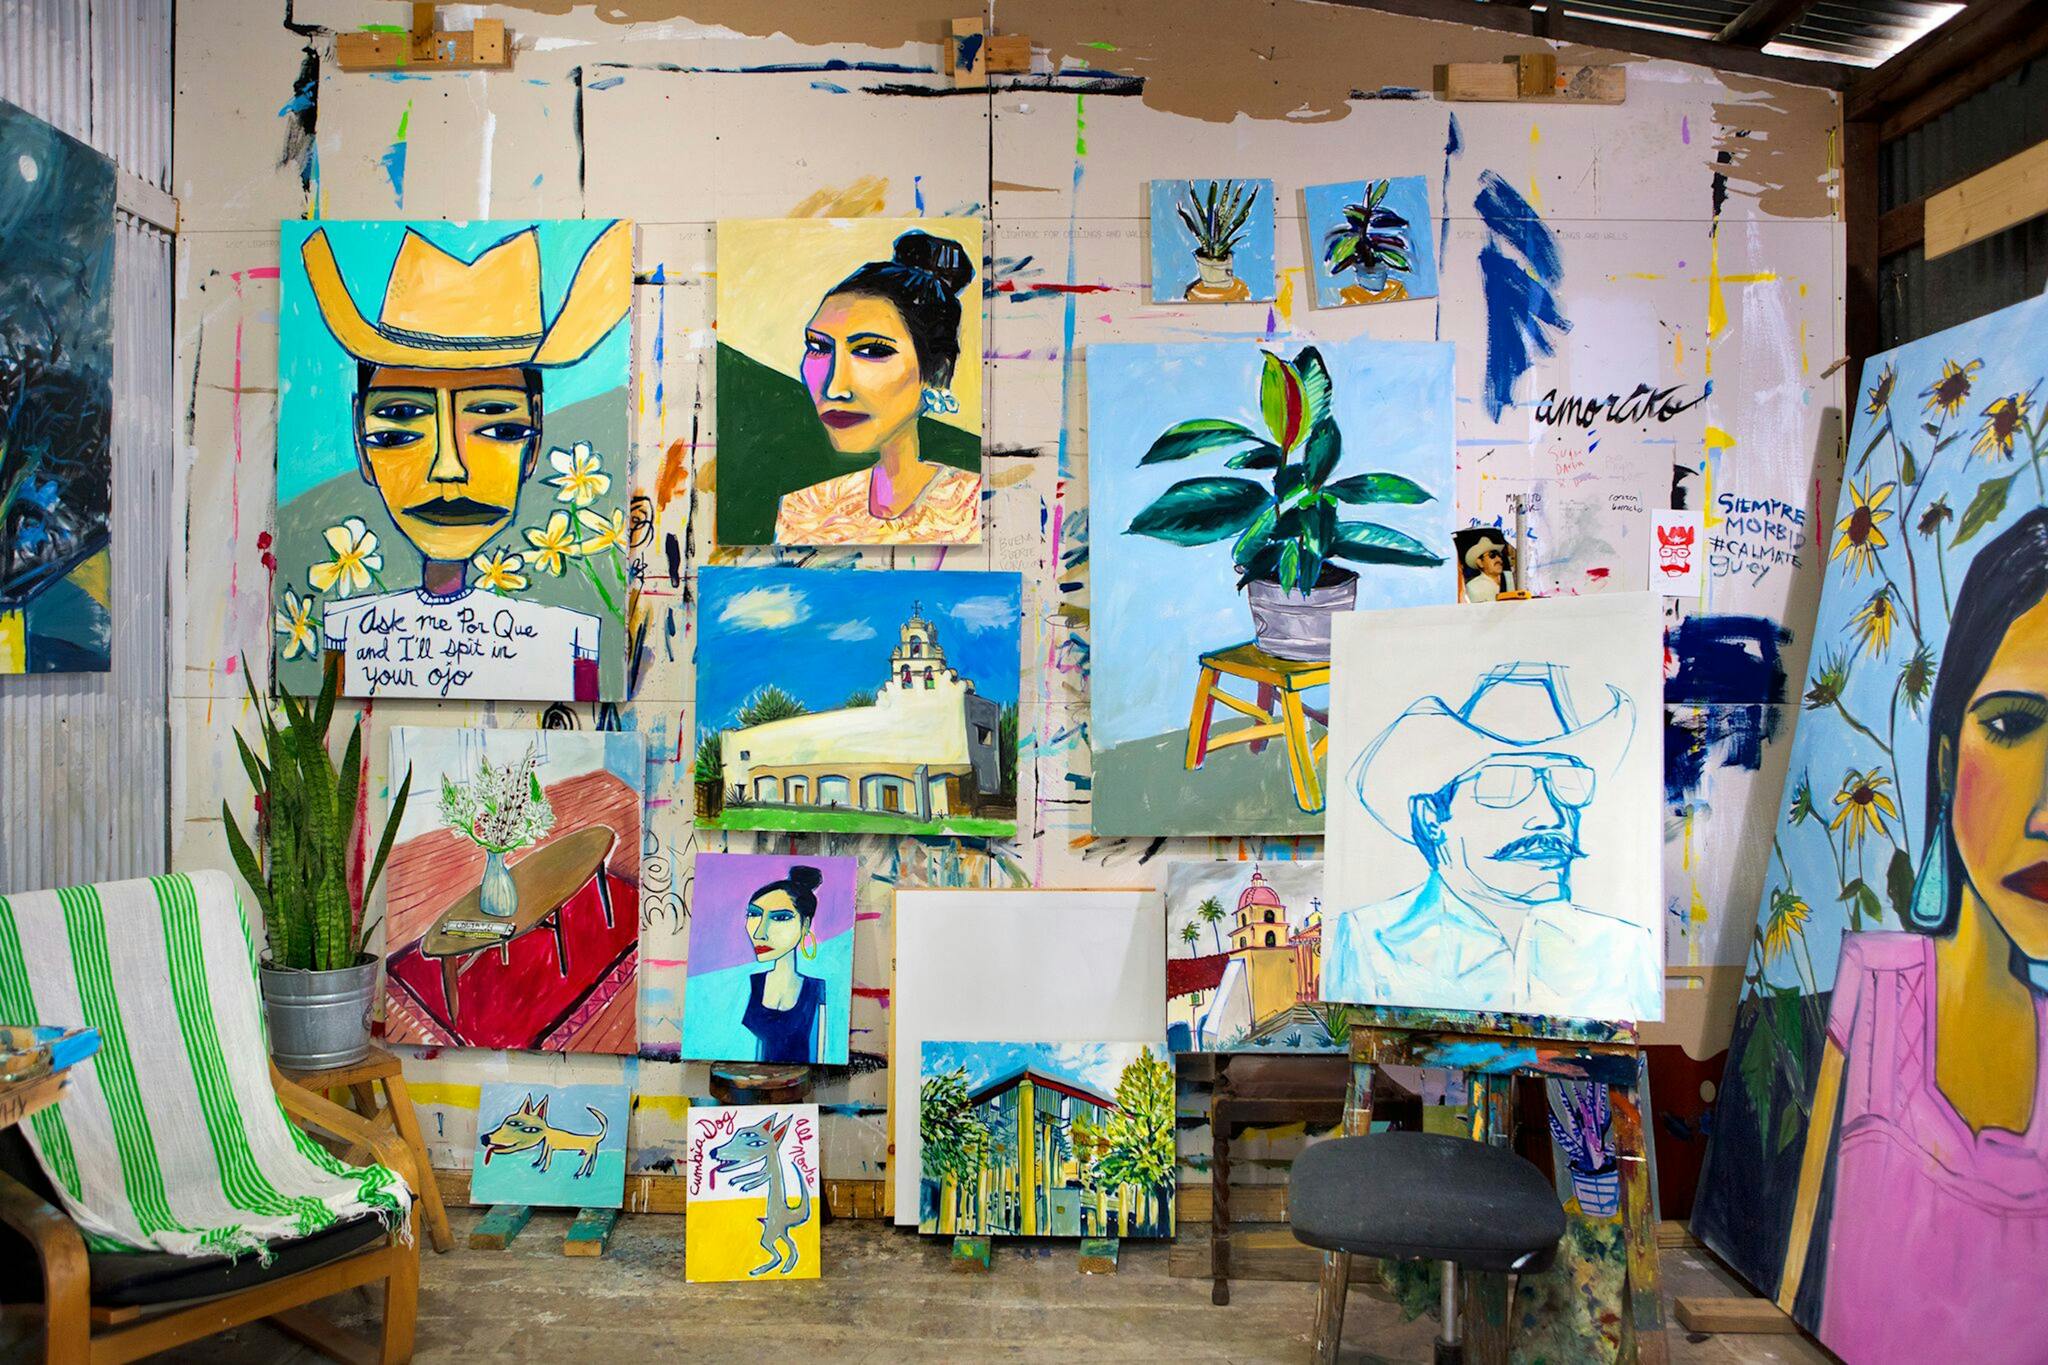 Cruz Ortiz's studio full of vibrant portraits and paintings.